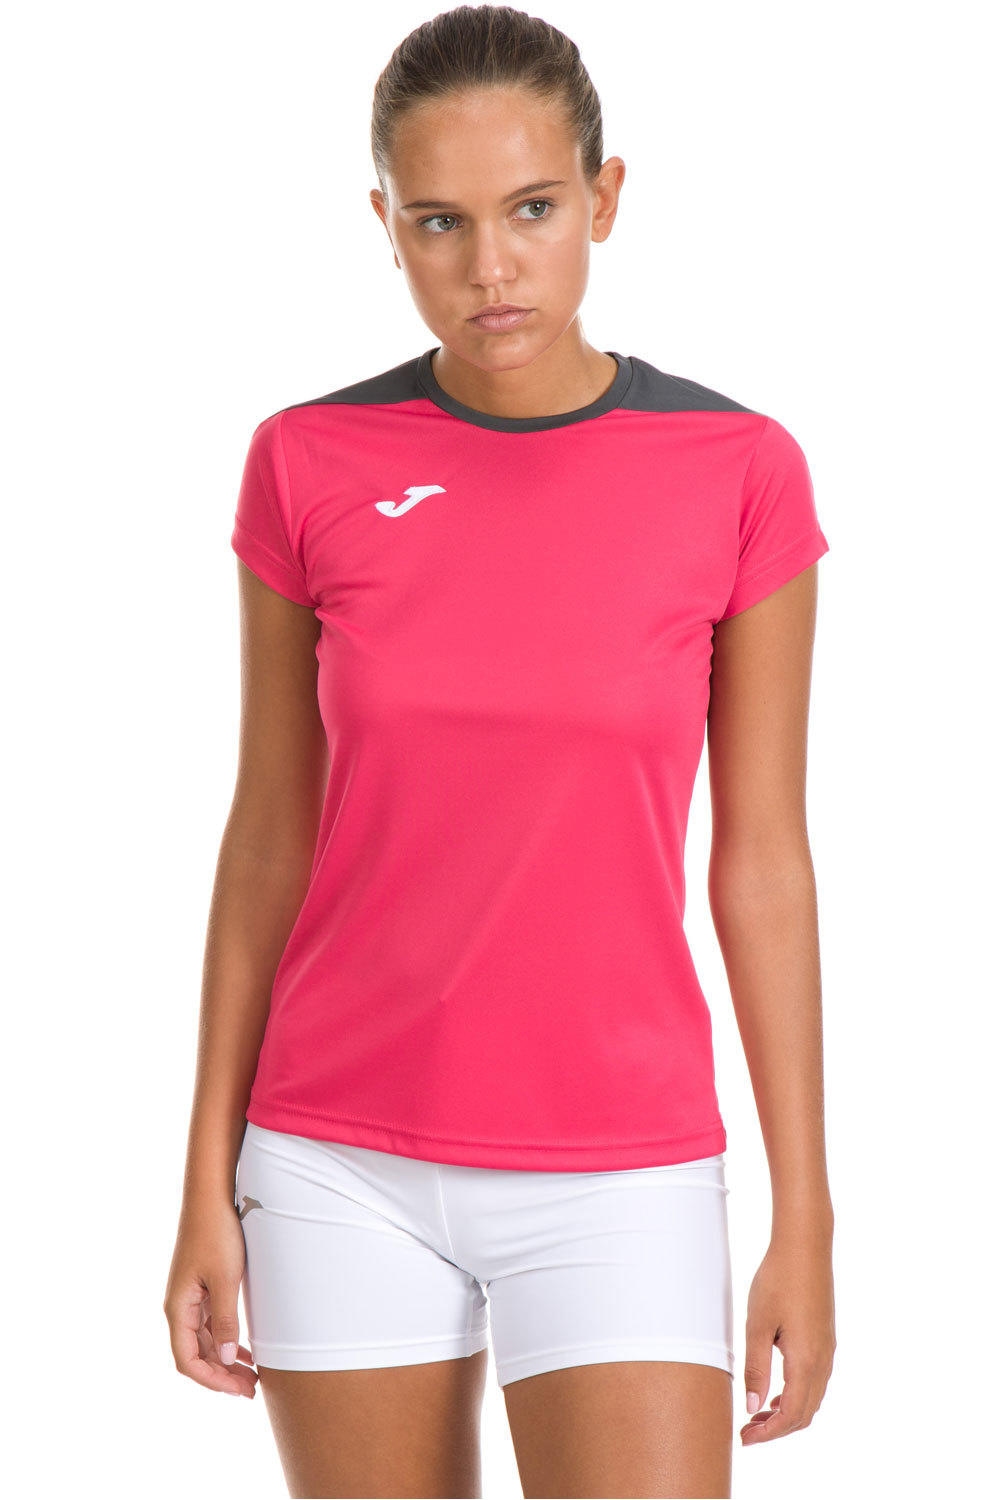 Joma camiseta tenis manga corta mujer CMTA. SPIKE SRA M/C vista frontal